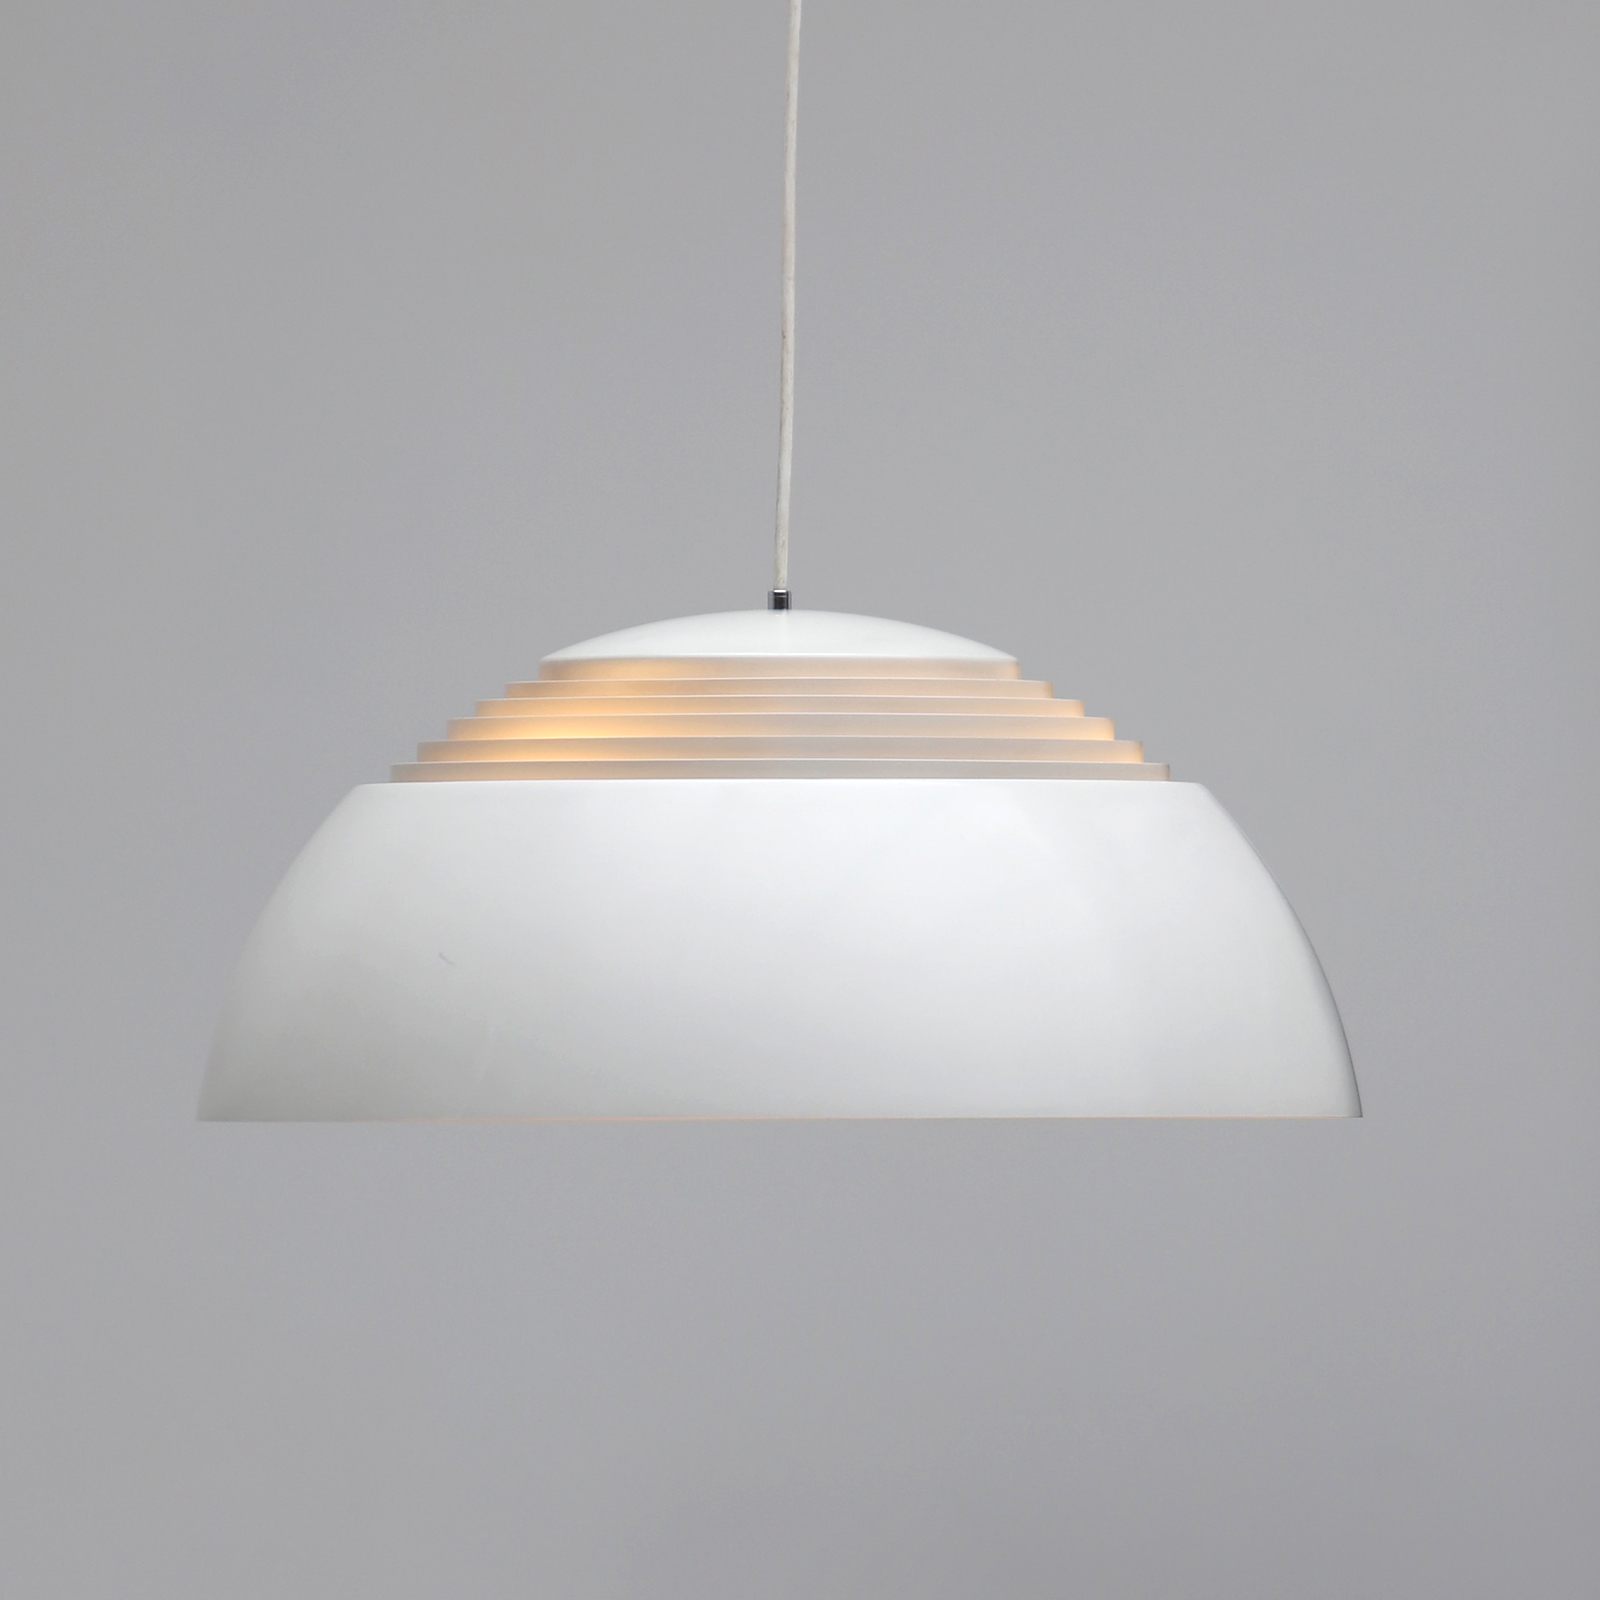 AJ Royal lamp in light grey by Arne Jacobsen for Louis Poulsen